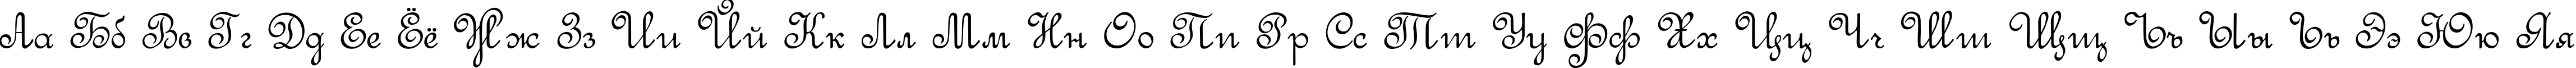 Пример написания русского алфавита шрифтом Round Script Italic